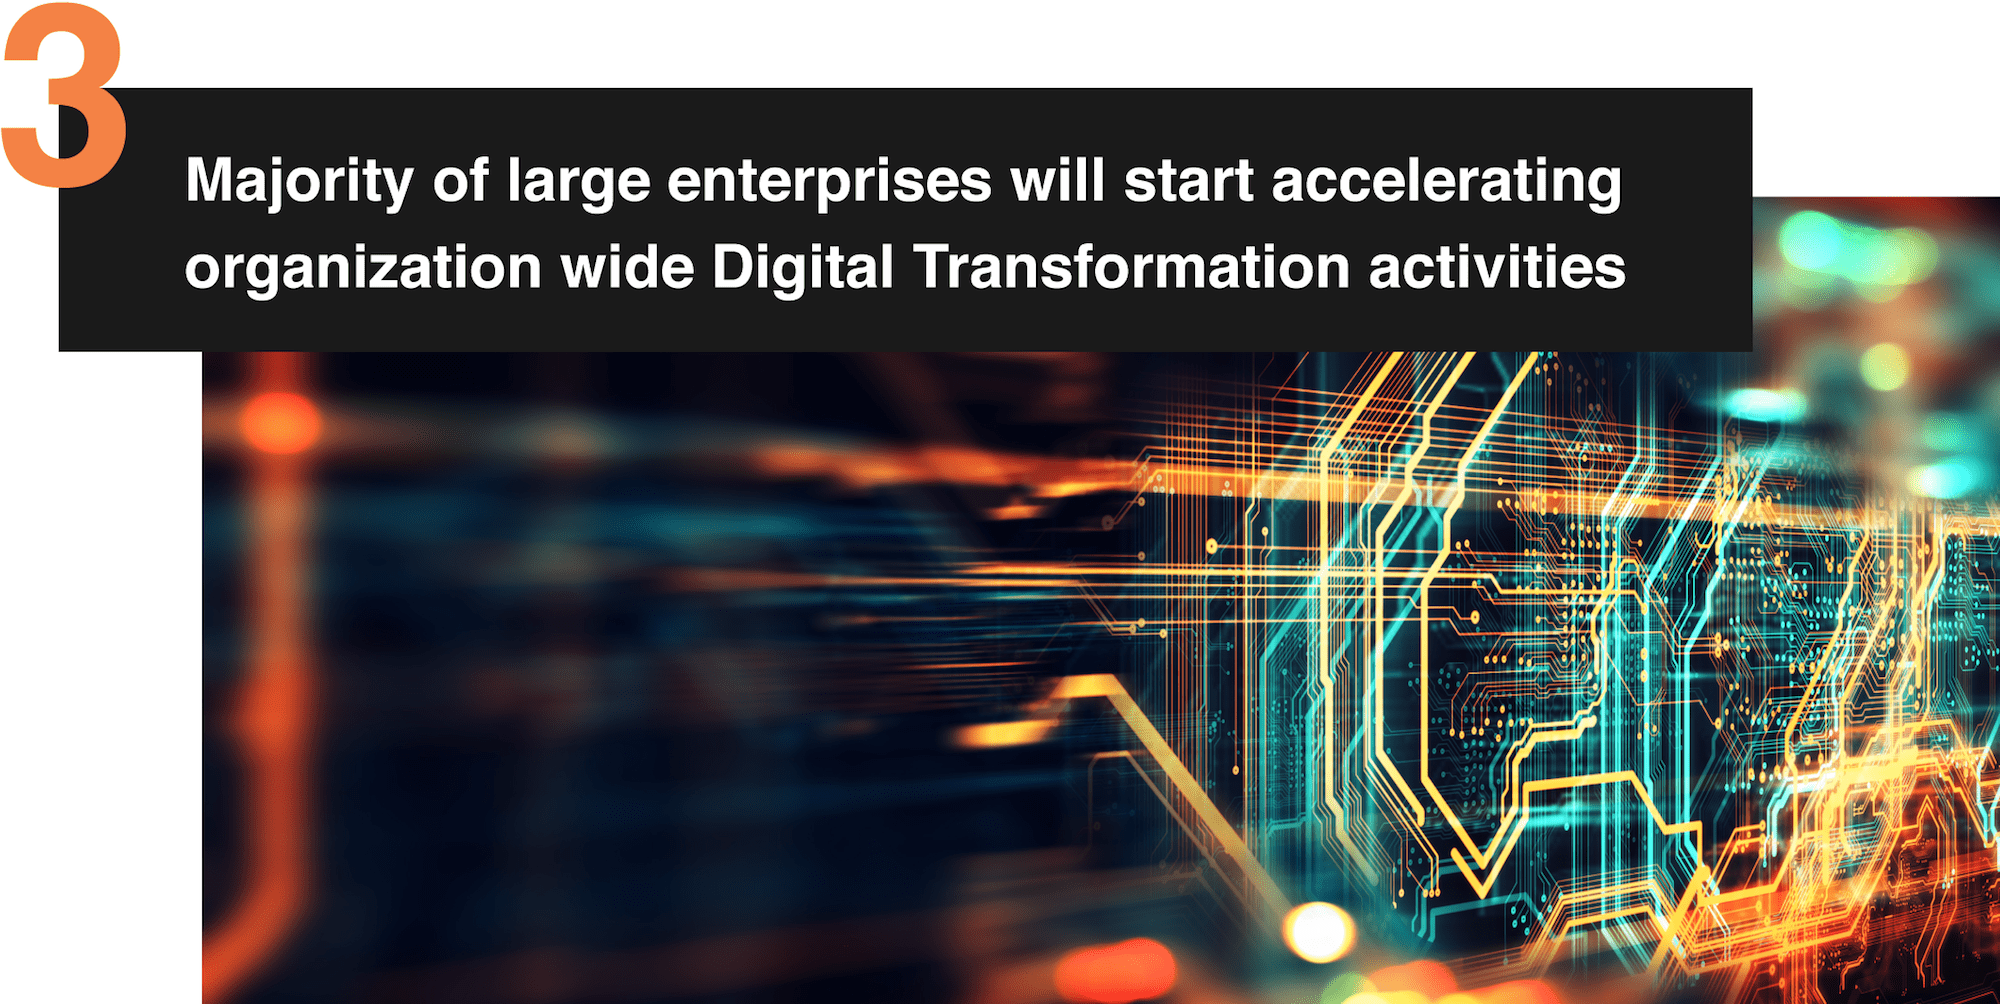 3. Majority of large enterprises will start accelerating organization wide digital transformation activities